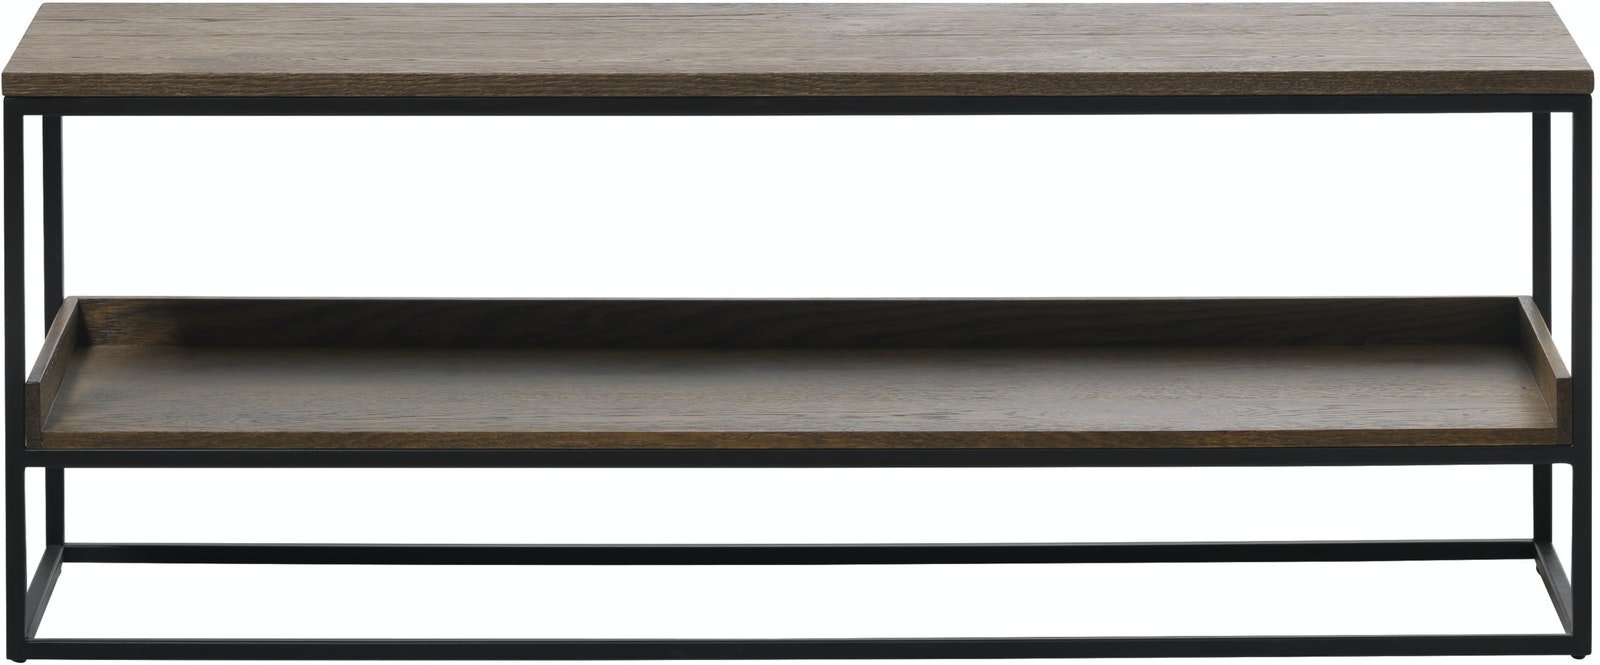 Rivoli, Bænk, Egetræ by Unique Furniture (H: 45 cm. x B: 35 cm. x L: 120 cm., Smoked)